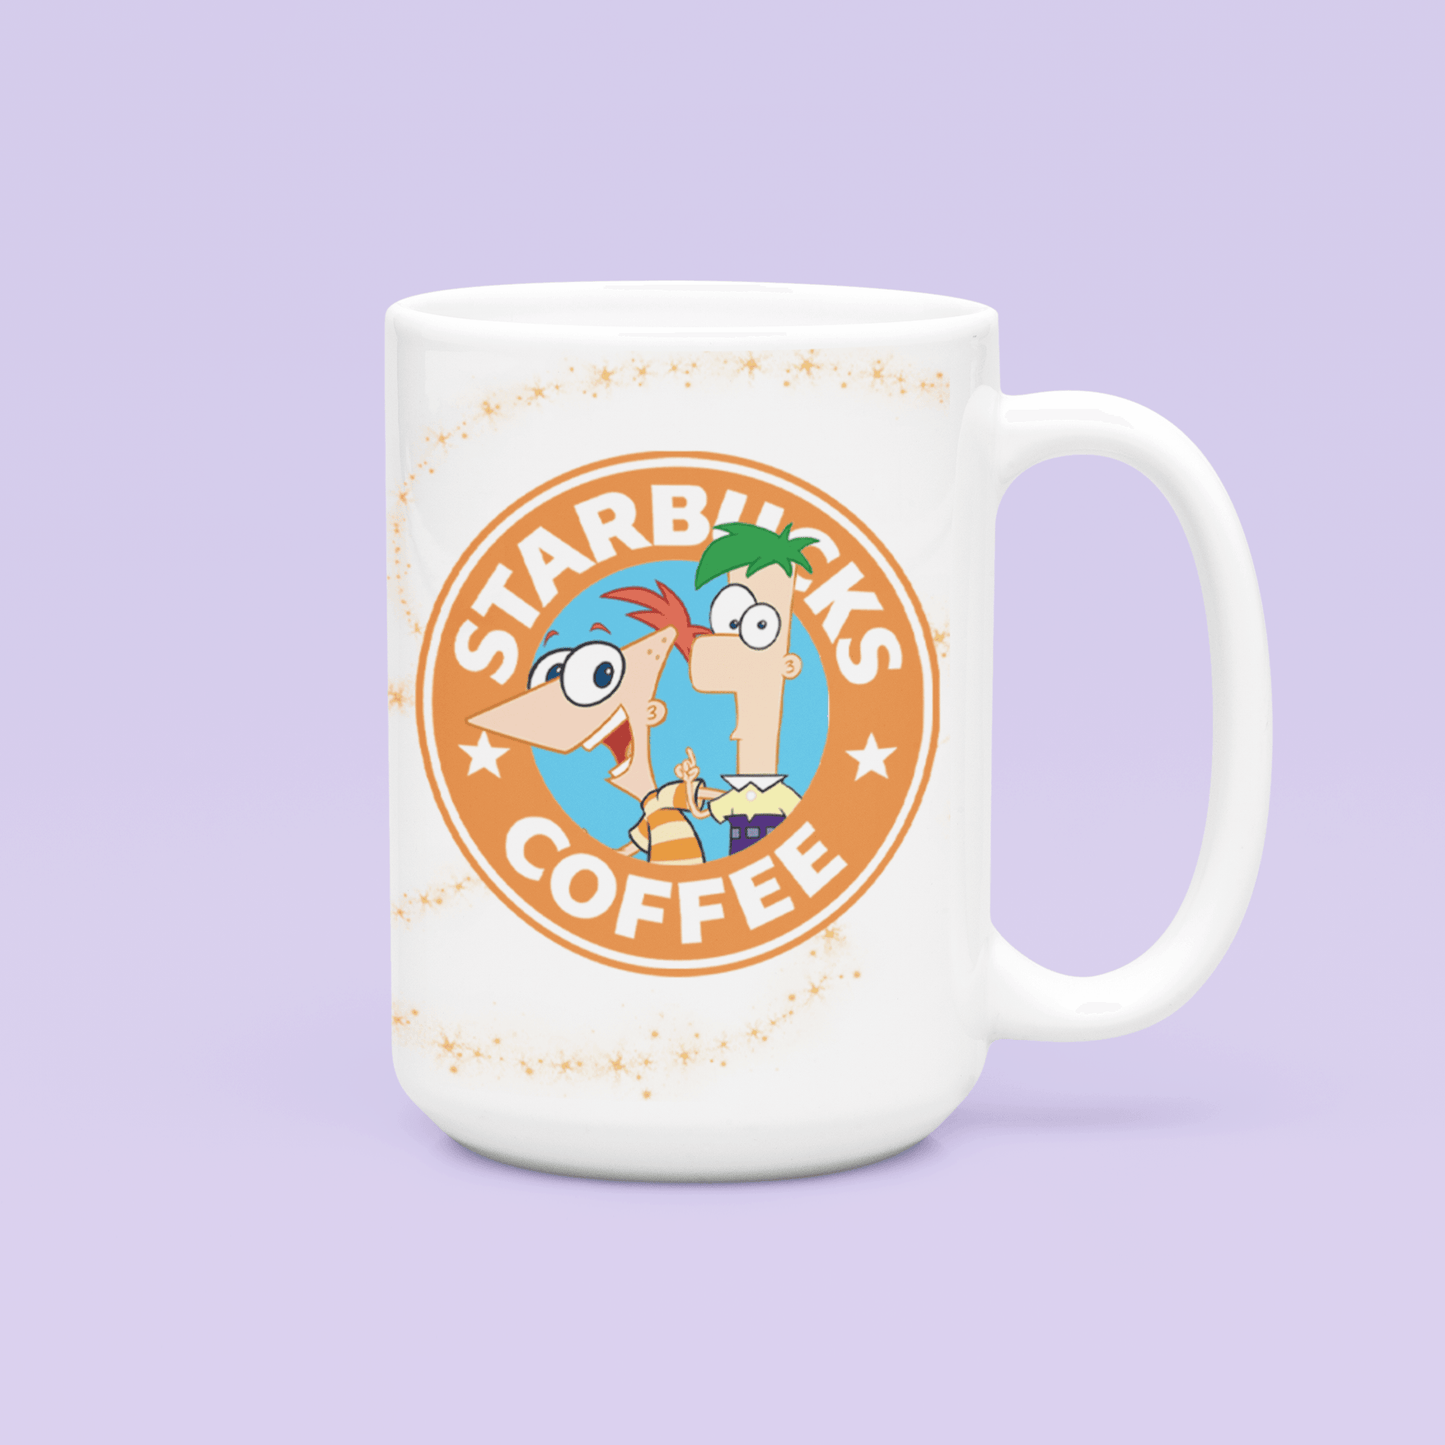 Phineas & Ferb Starbucks Mug - Two Crafty Gays